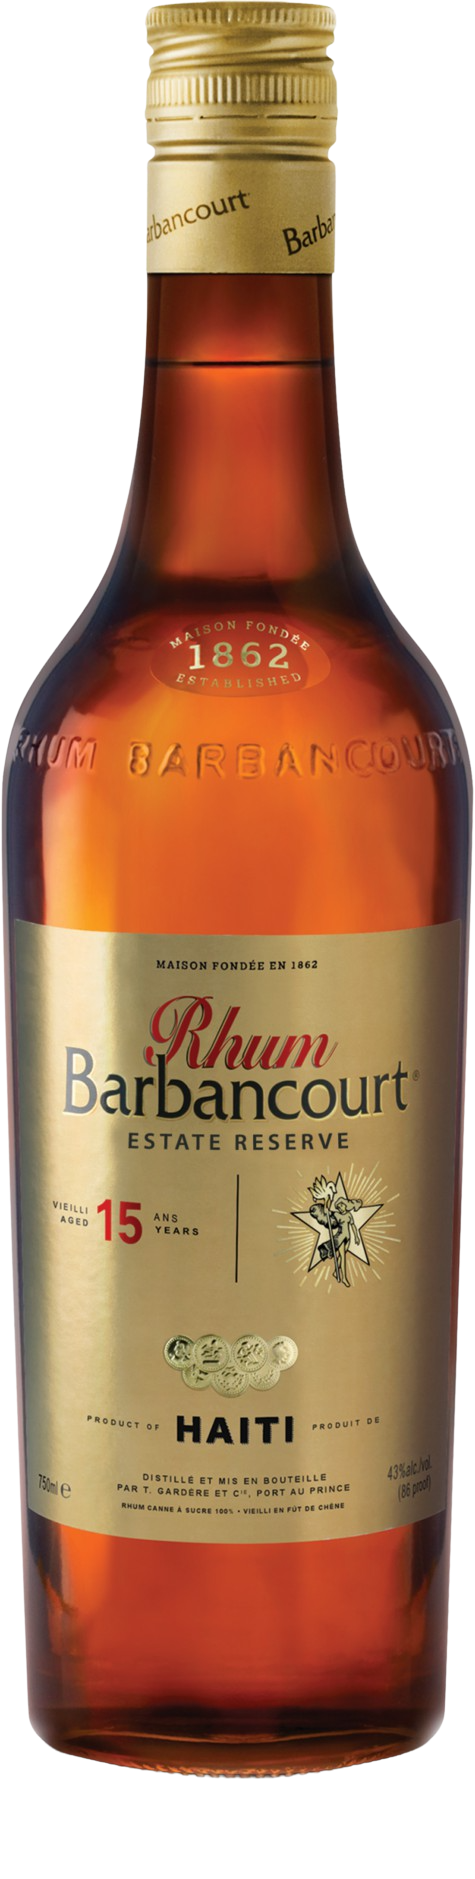 Barbancourt 15 Year Old "Reserve Du Domaine" Rum, 12/750ml